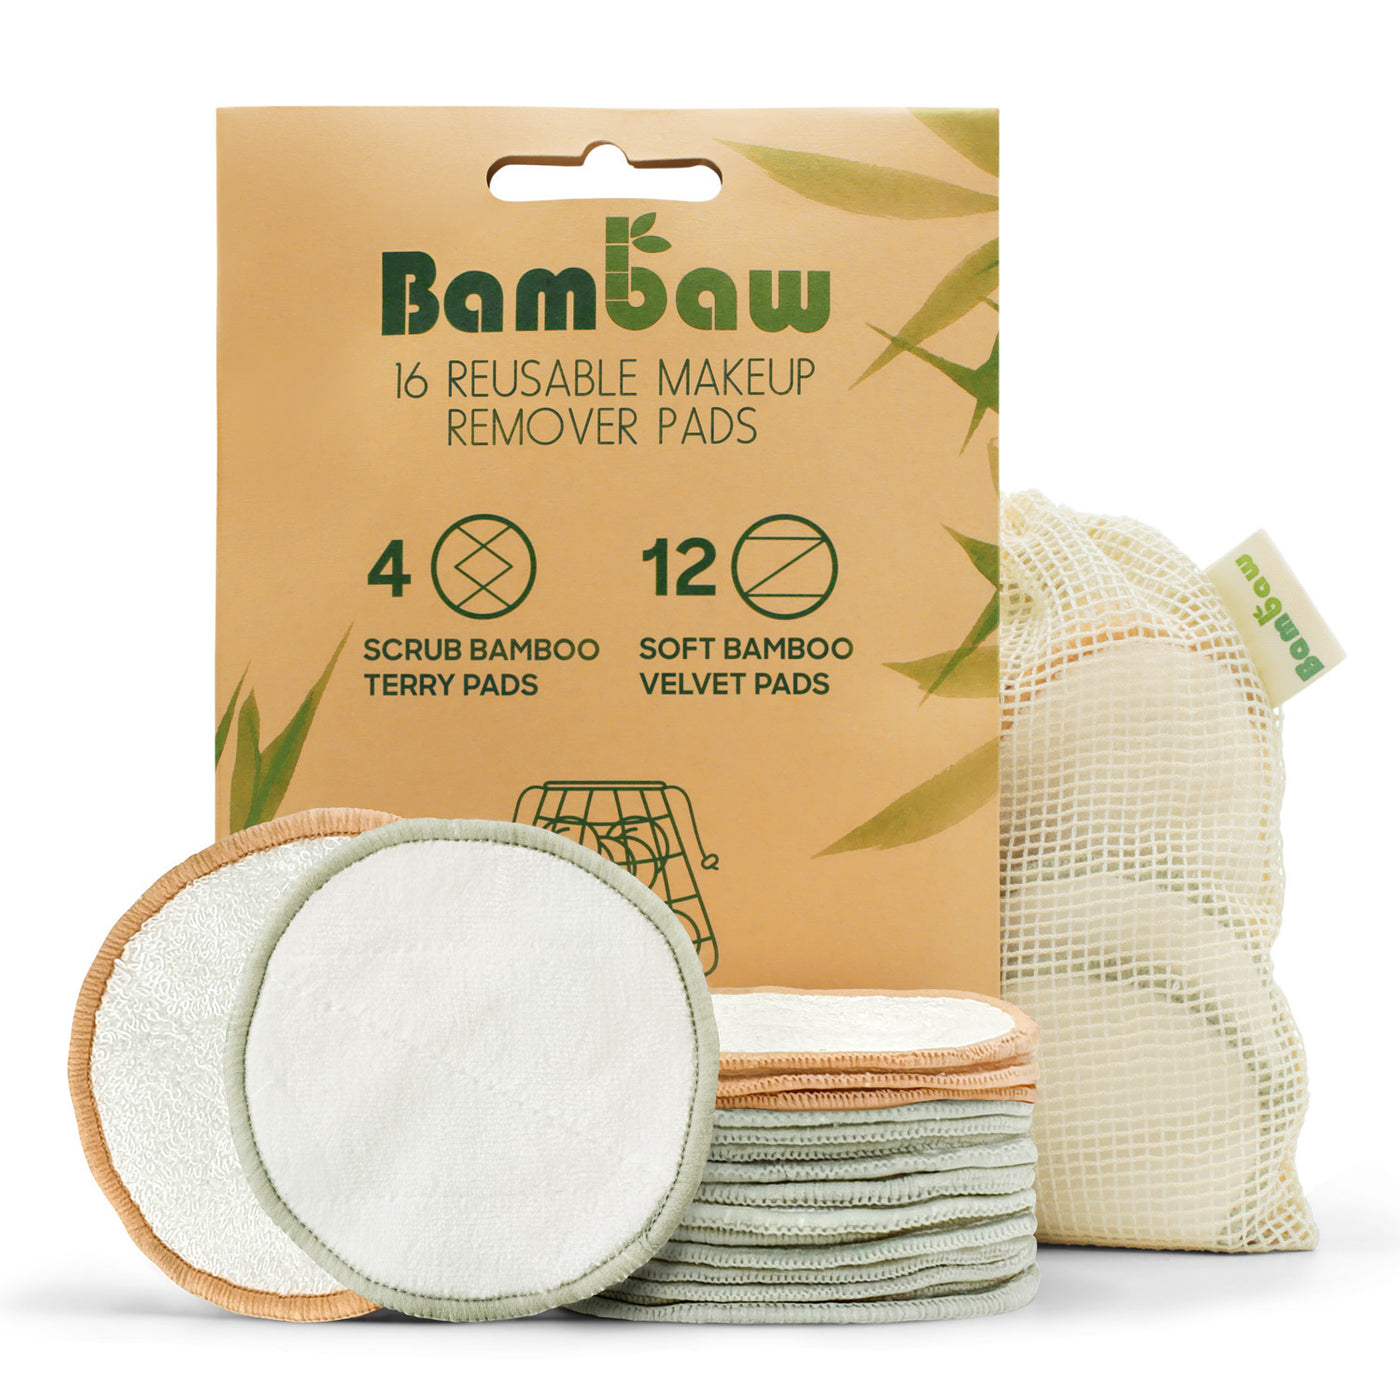 Bambaw Reusable Removal Pads -16 pcs